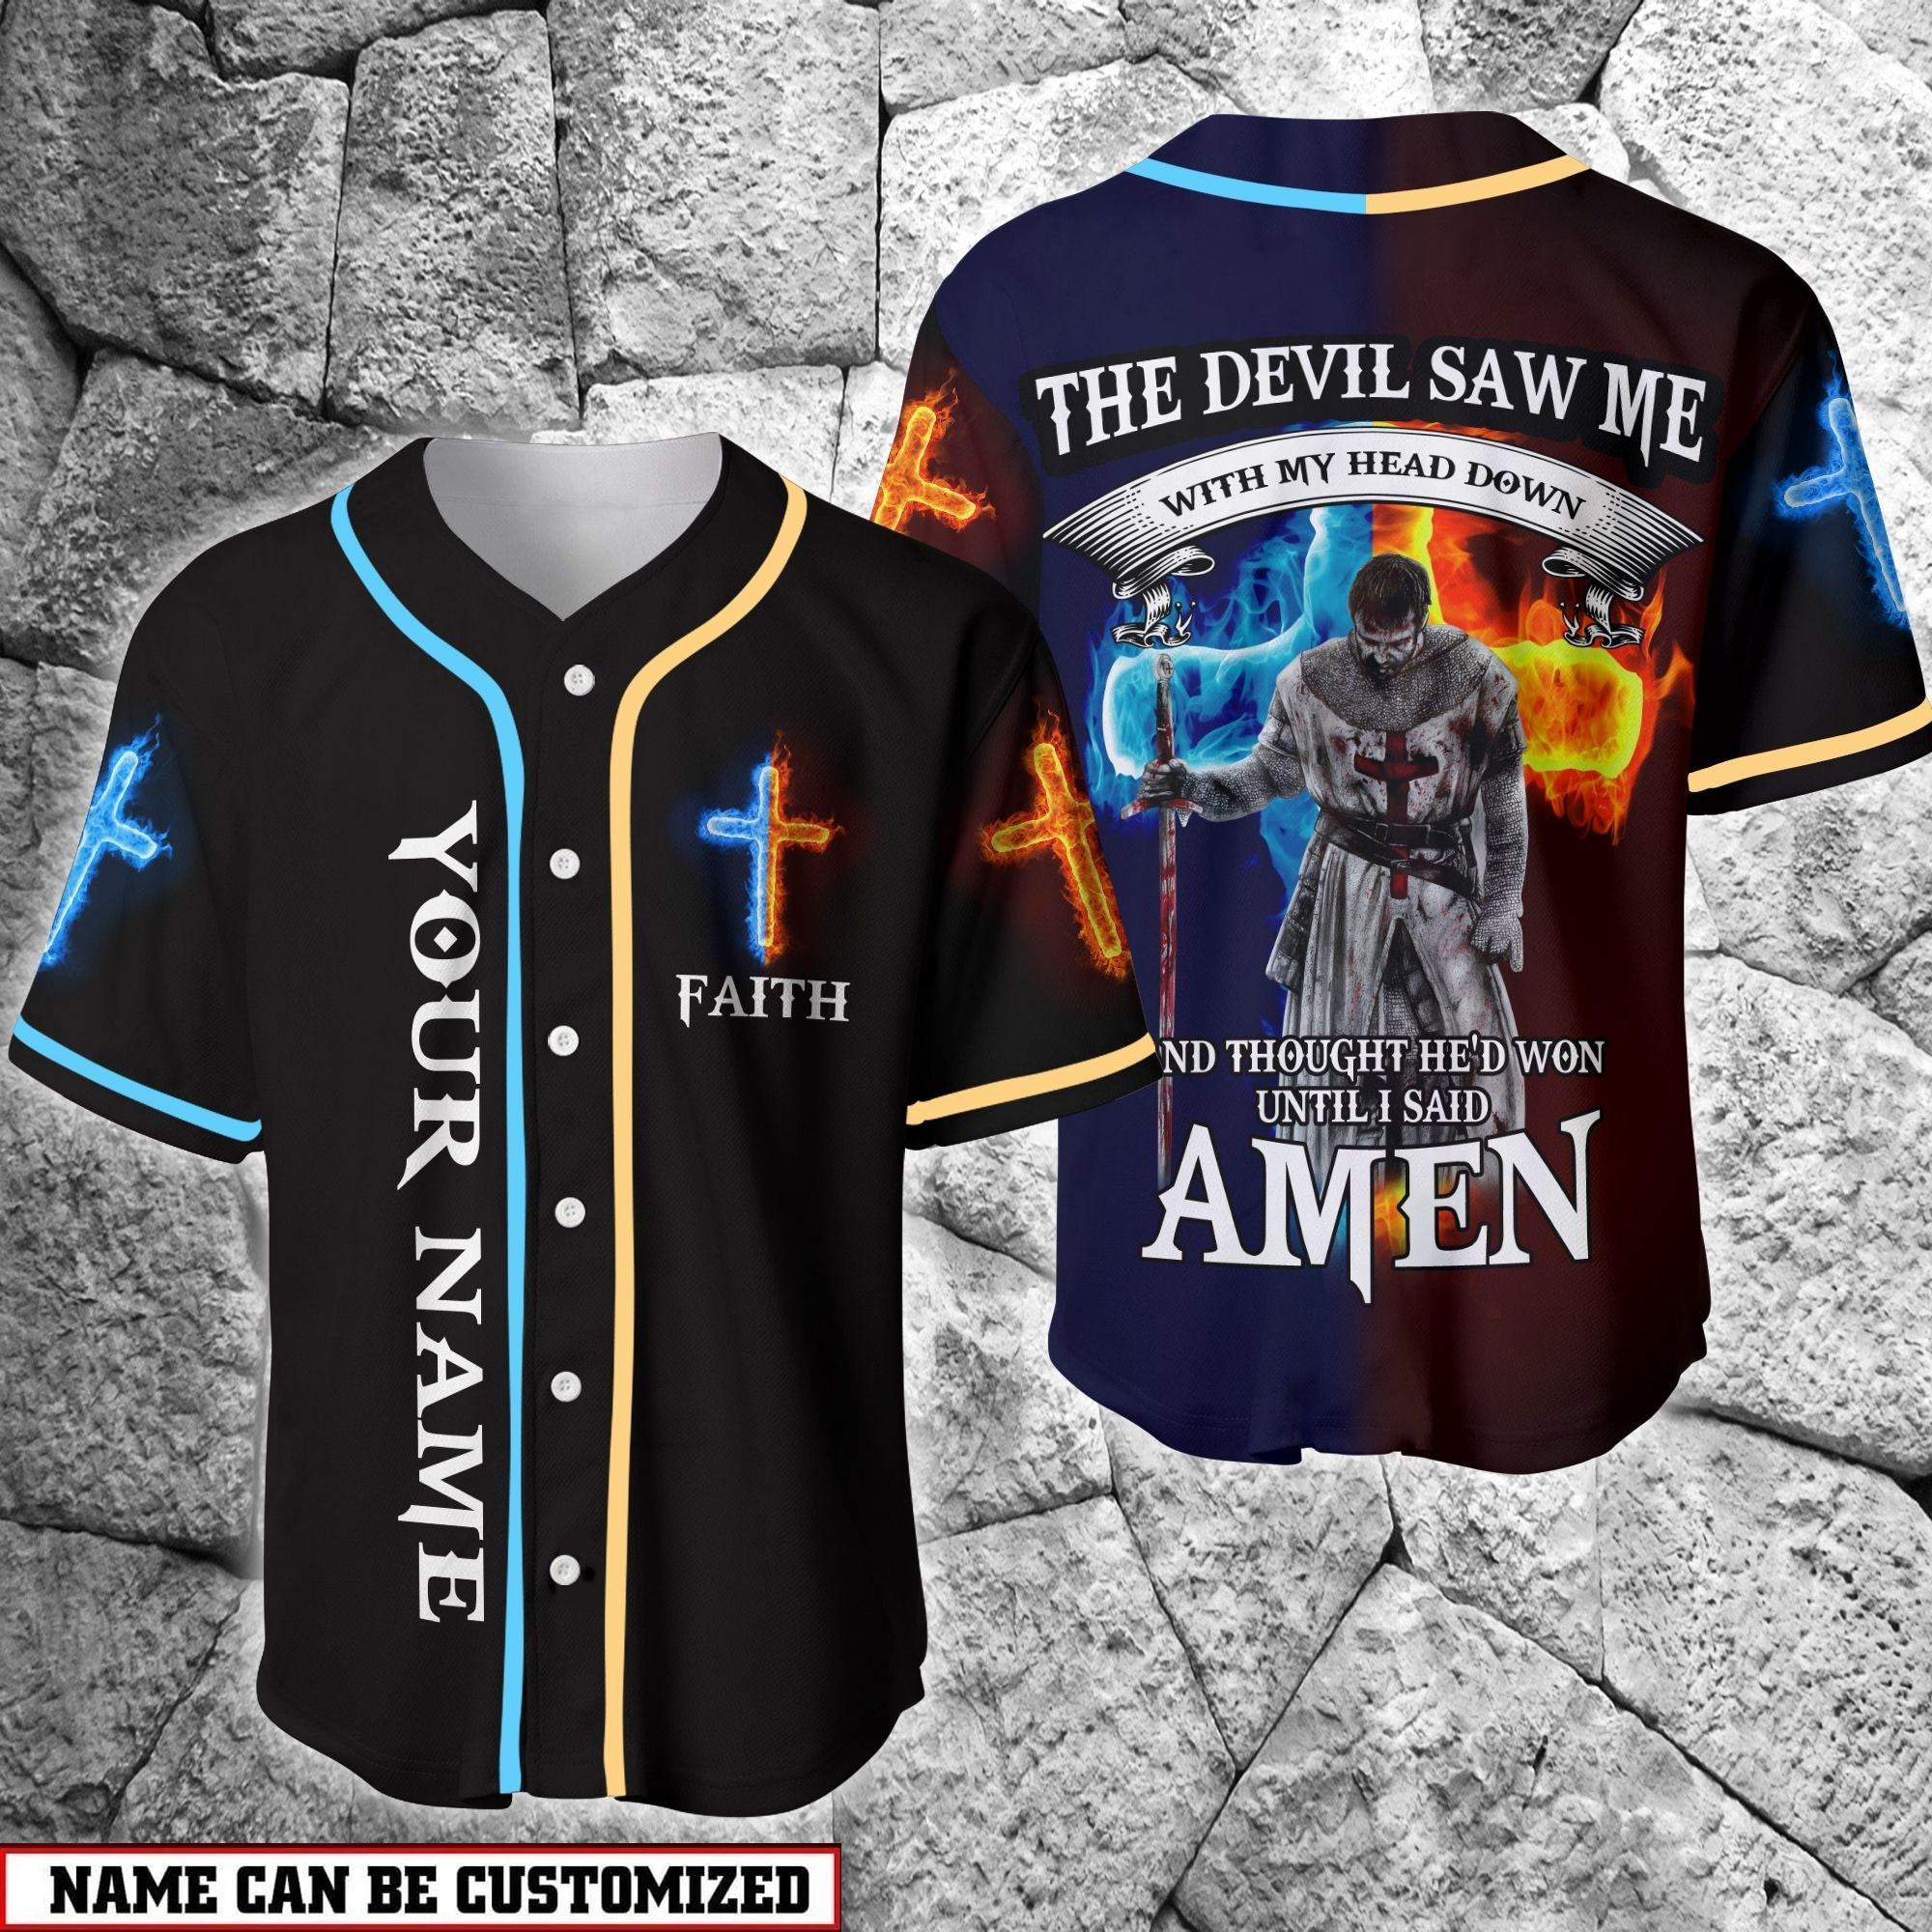 Personalized Jesus Baseball Jersey - Cross Flame Baseball Jersey - Gift For Christians - Knight I Said Amen Custom Baseball Jersey Shirt For Men Women